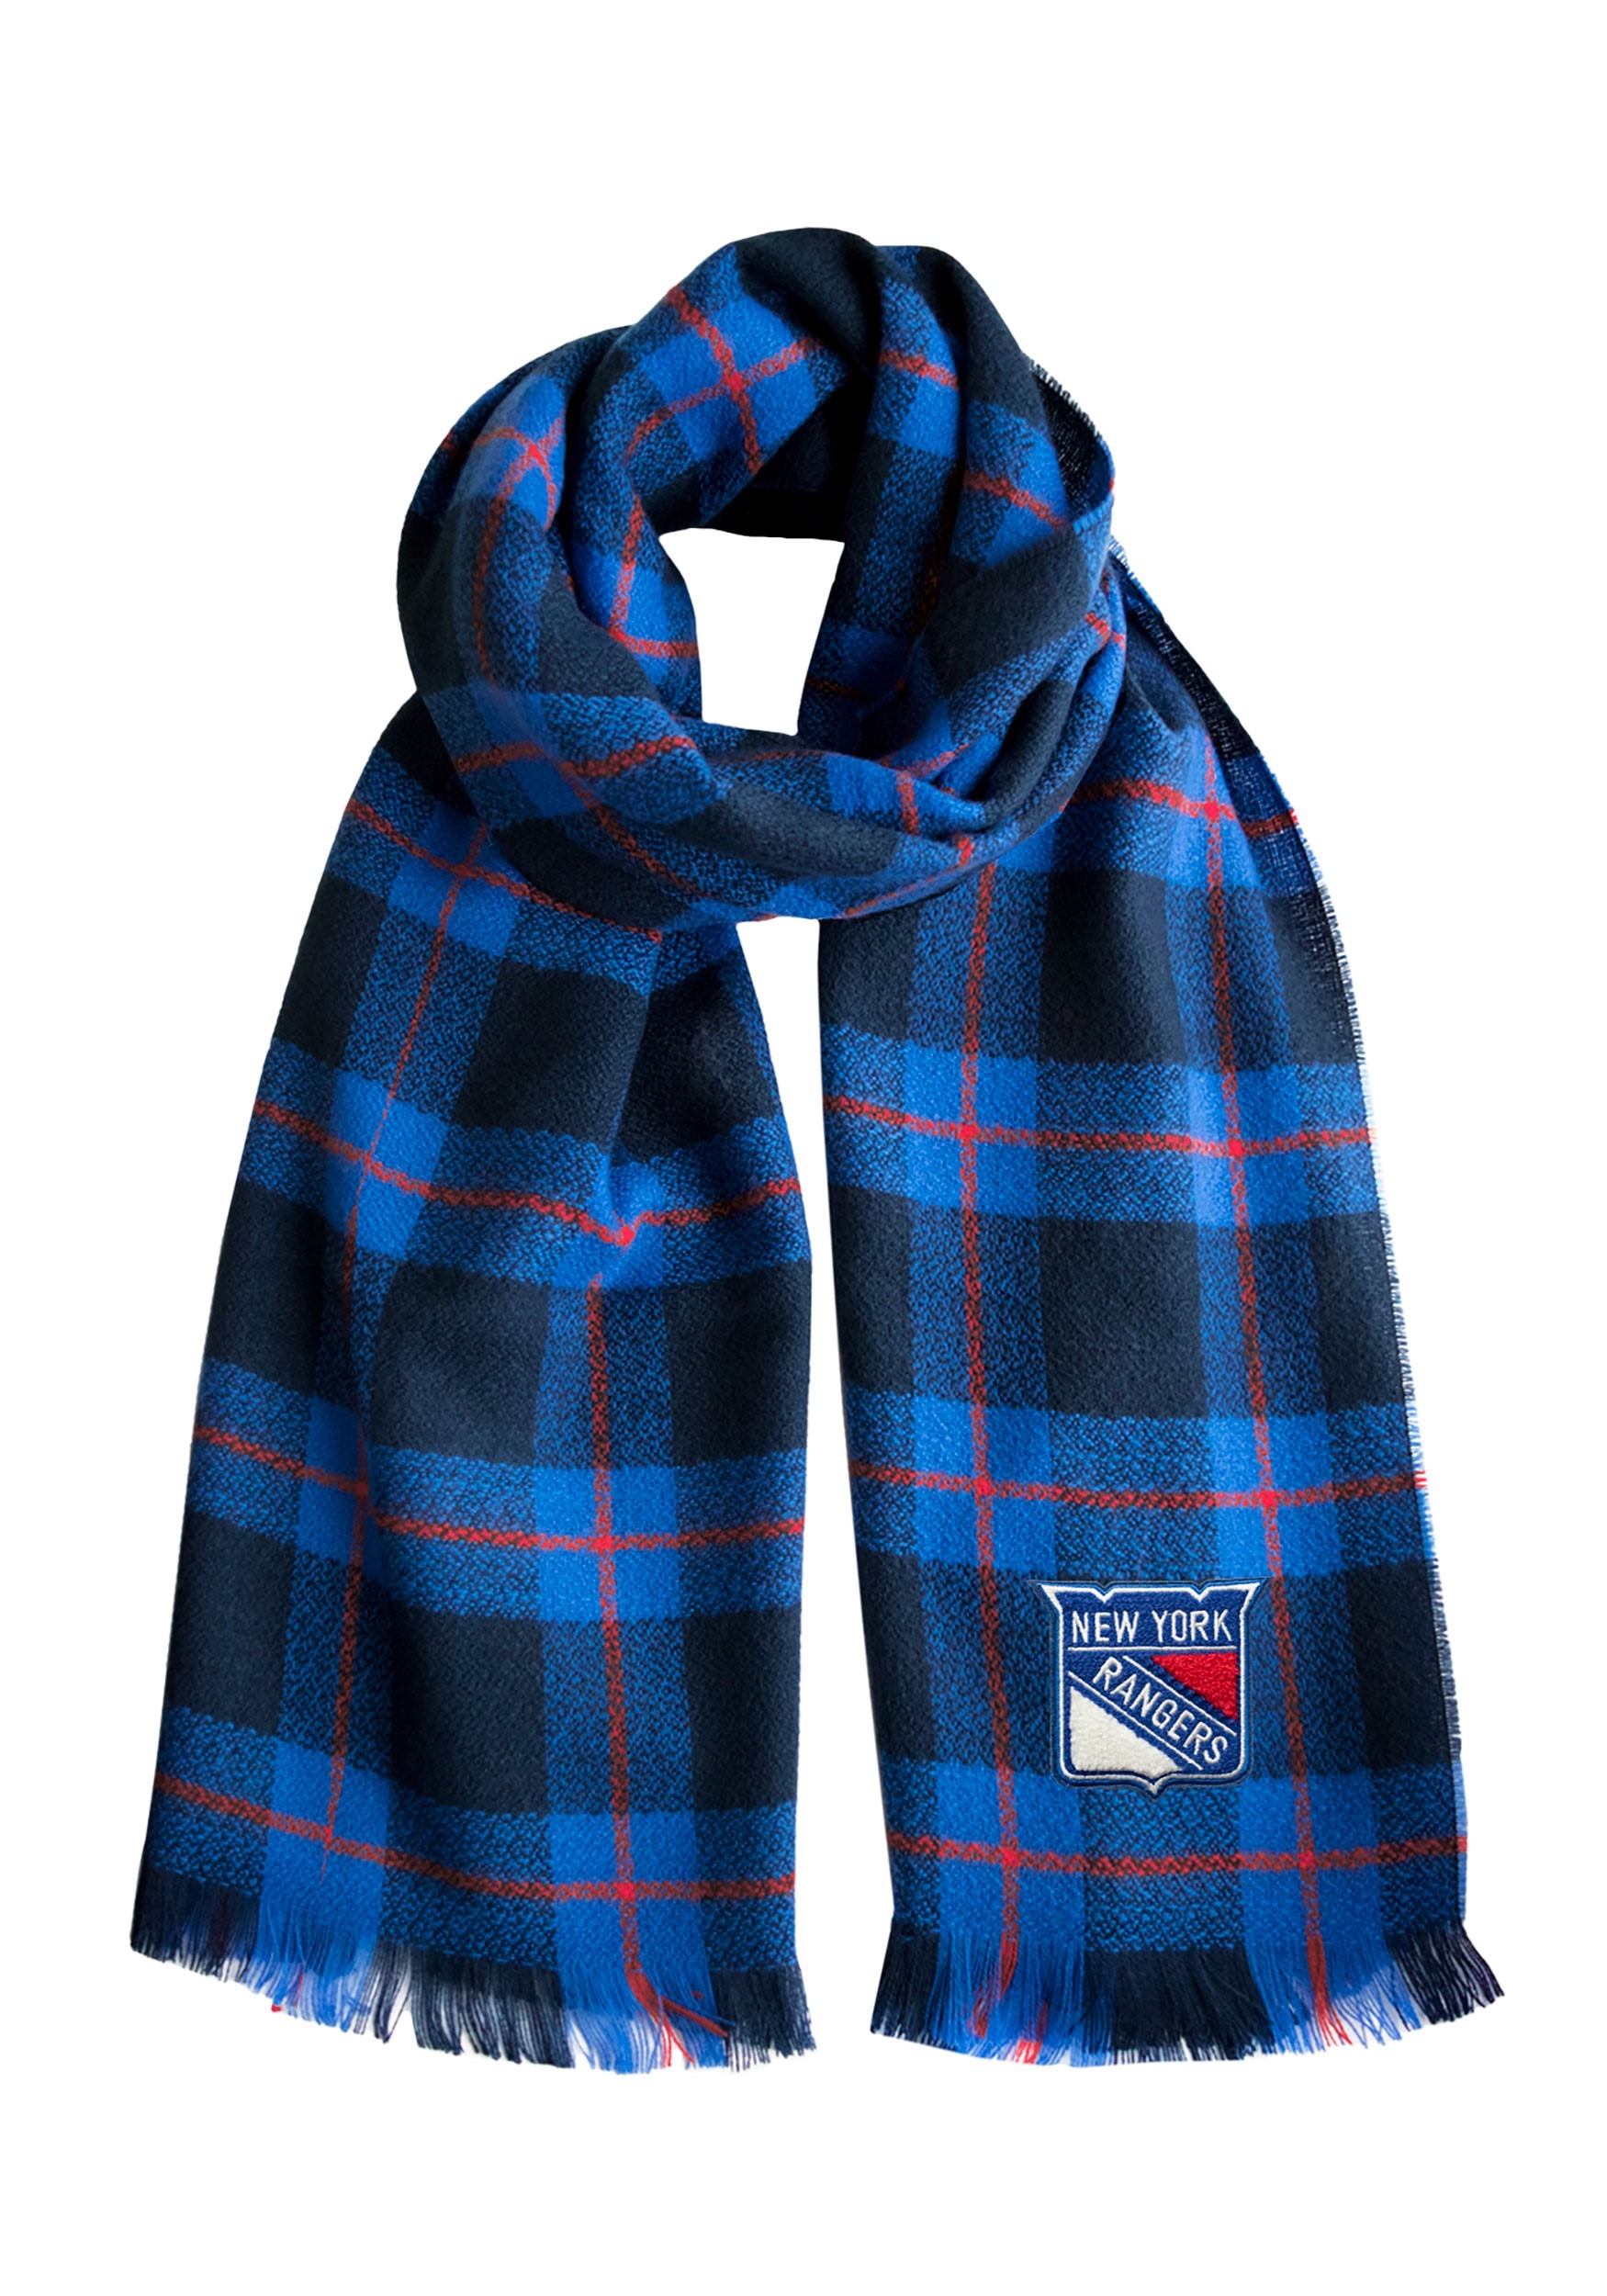 Plaid NHL New York Rangers Adult Blanket Scarf